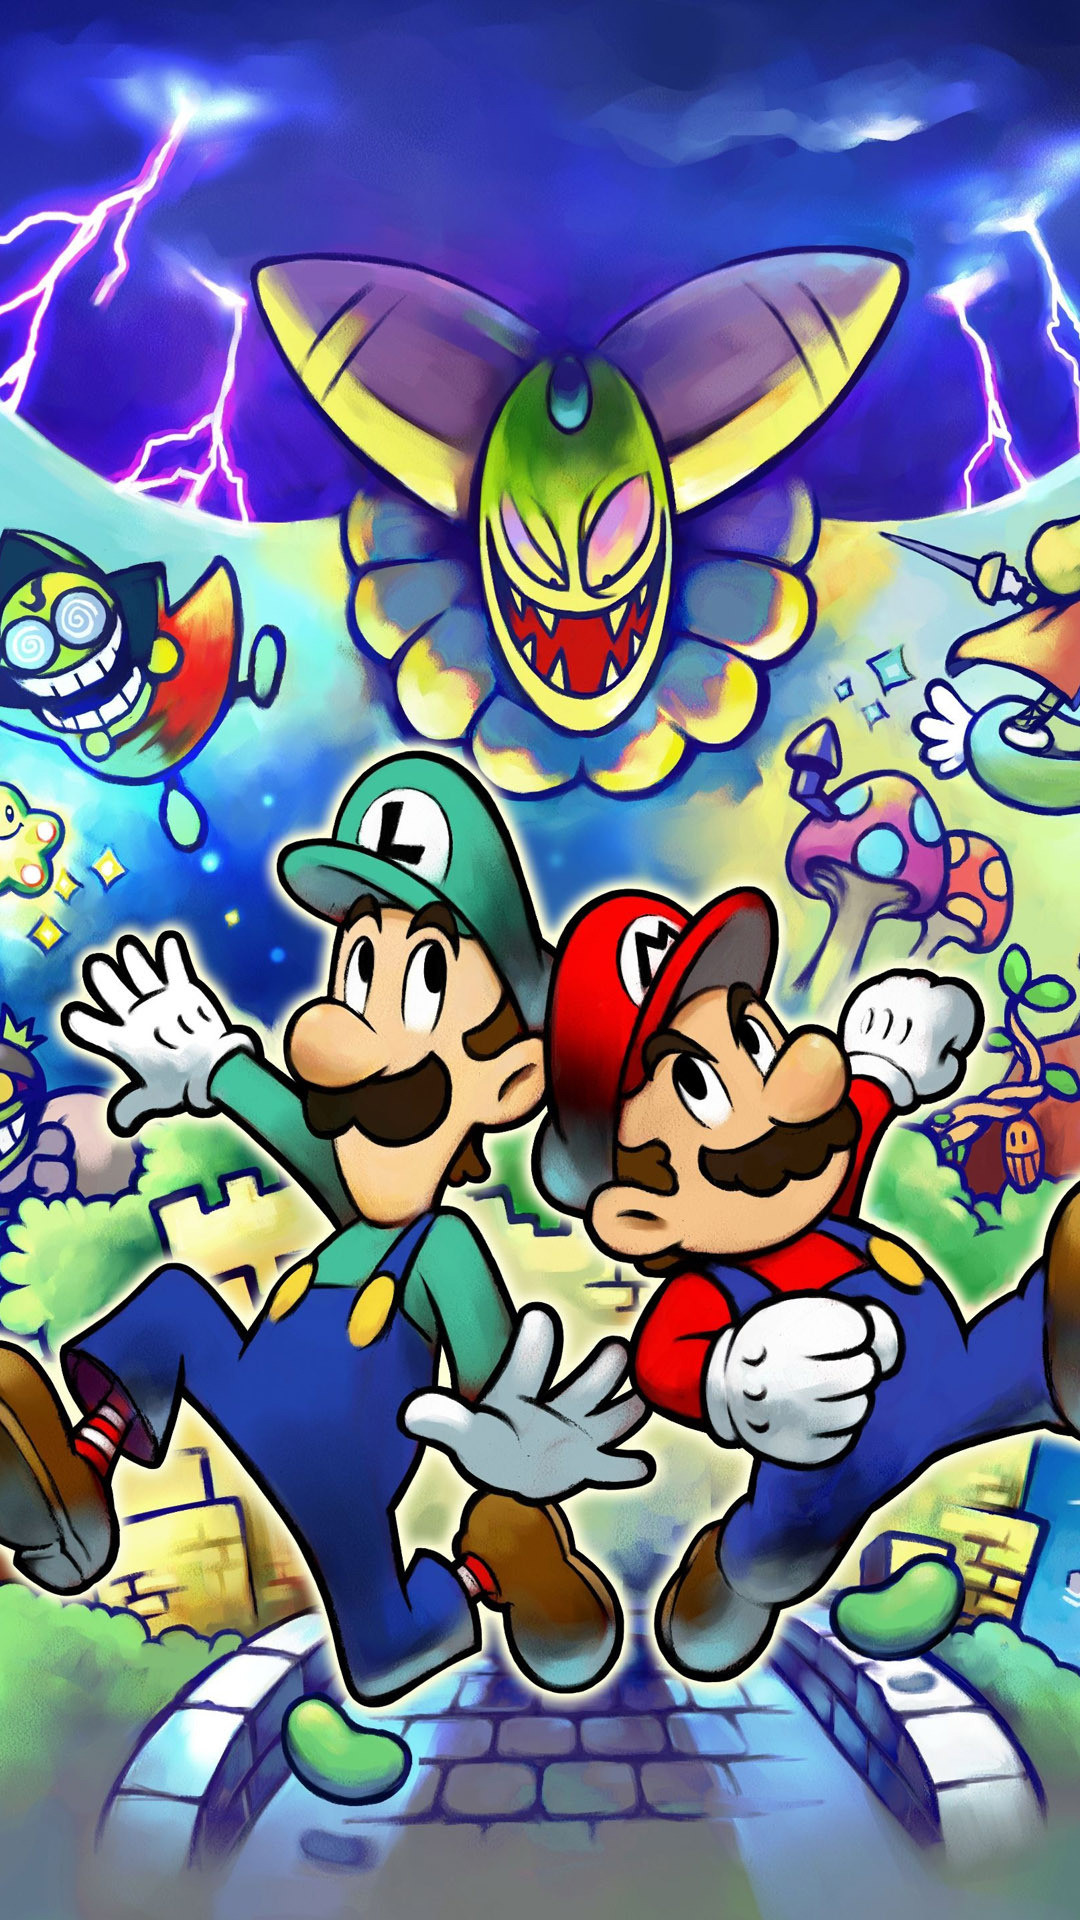 Super Mario Bros APK Download Latest 2020 Version ...